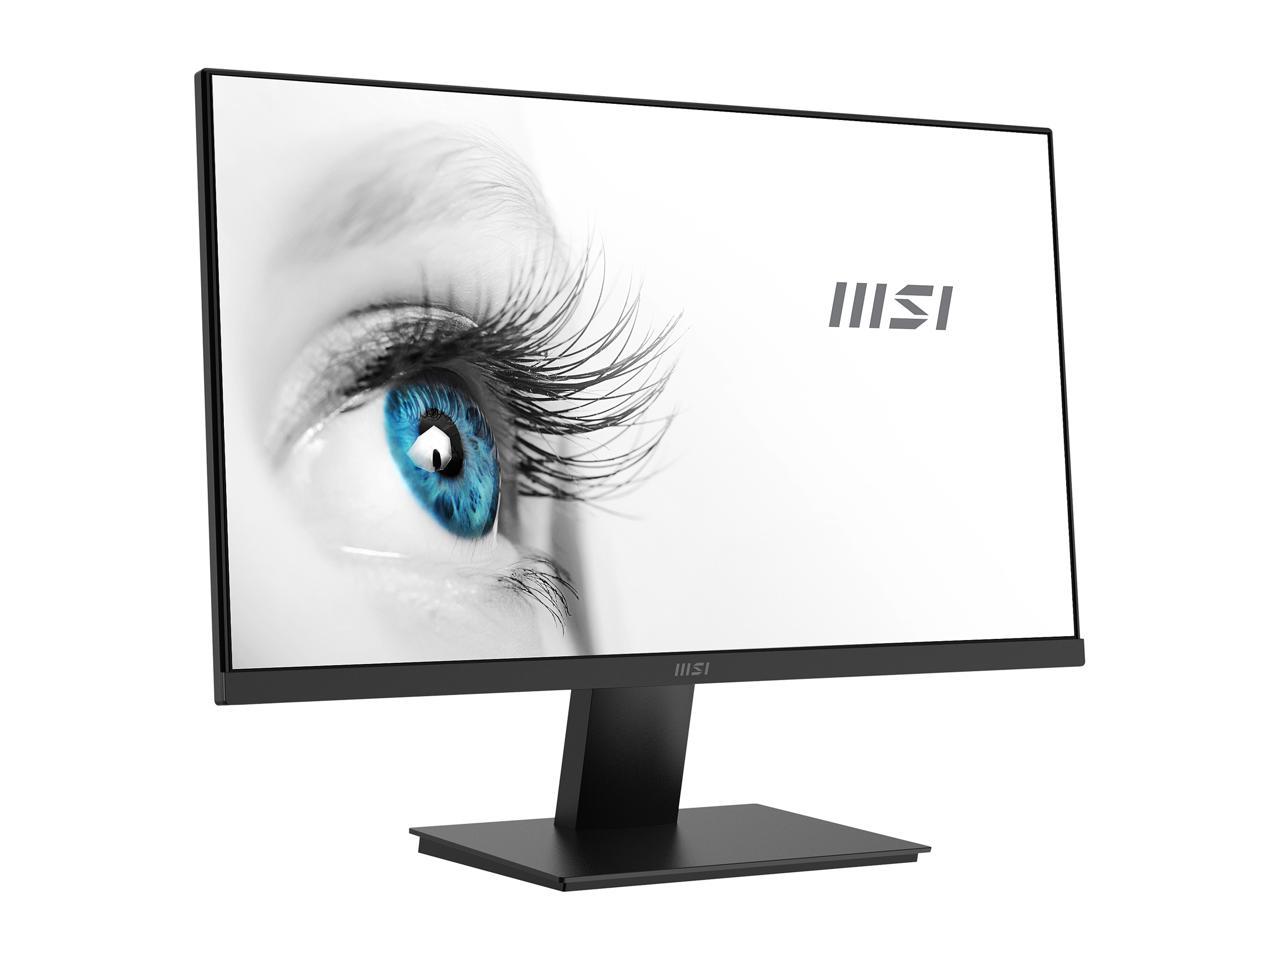 MSI Pro 24 inch Full HD LCD Monitor - 16:9 - MP241X - Black (New) - image 4 of 5